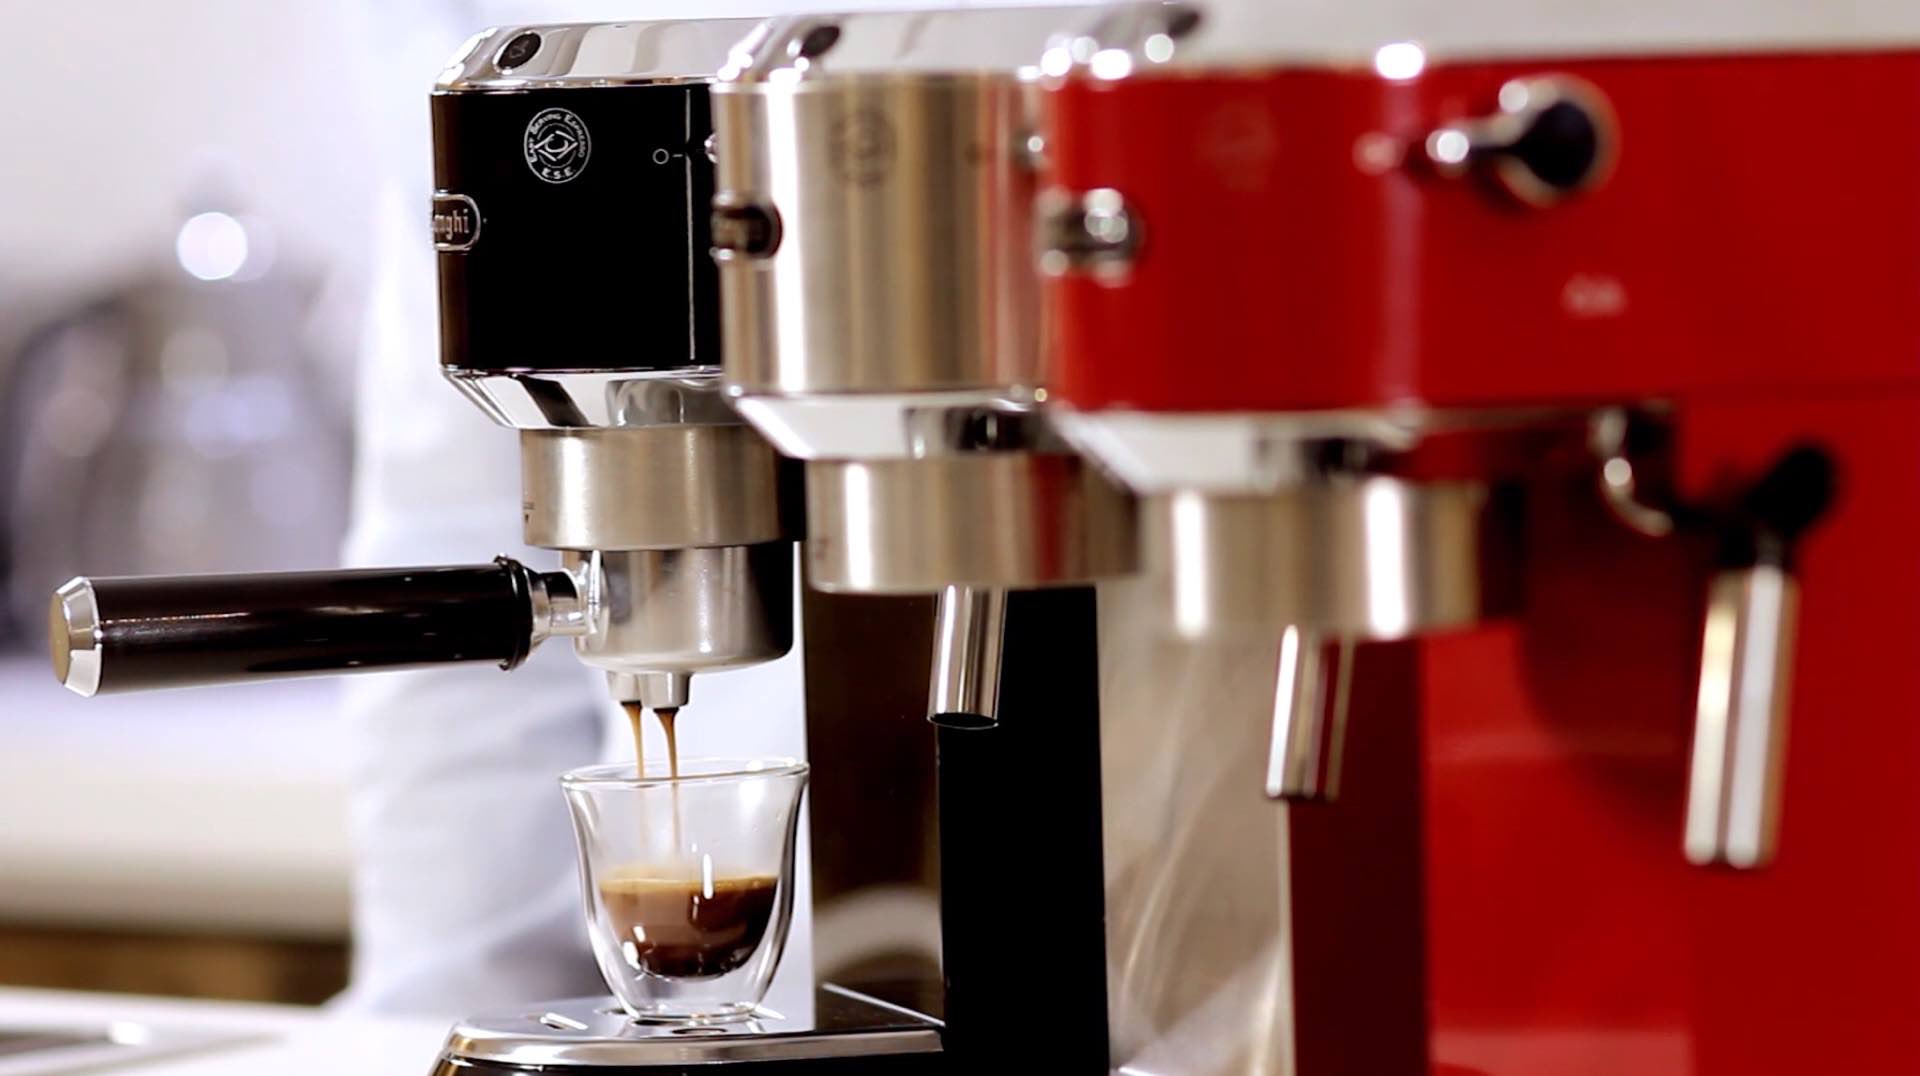 DeLonghi EC685R Dedica DeLuxe Pump Espresso Machine - Red – Whole